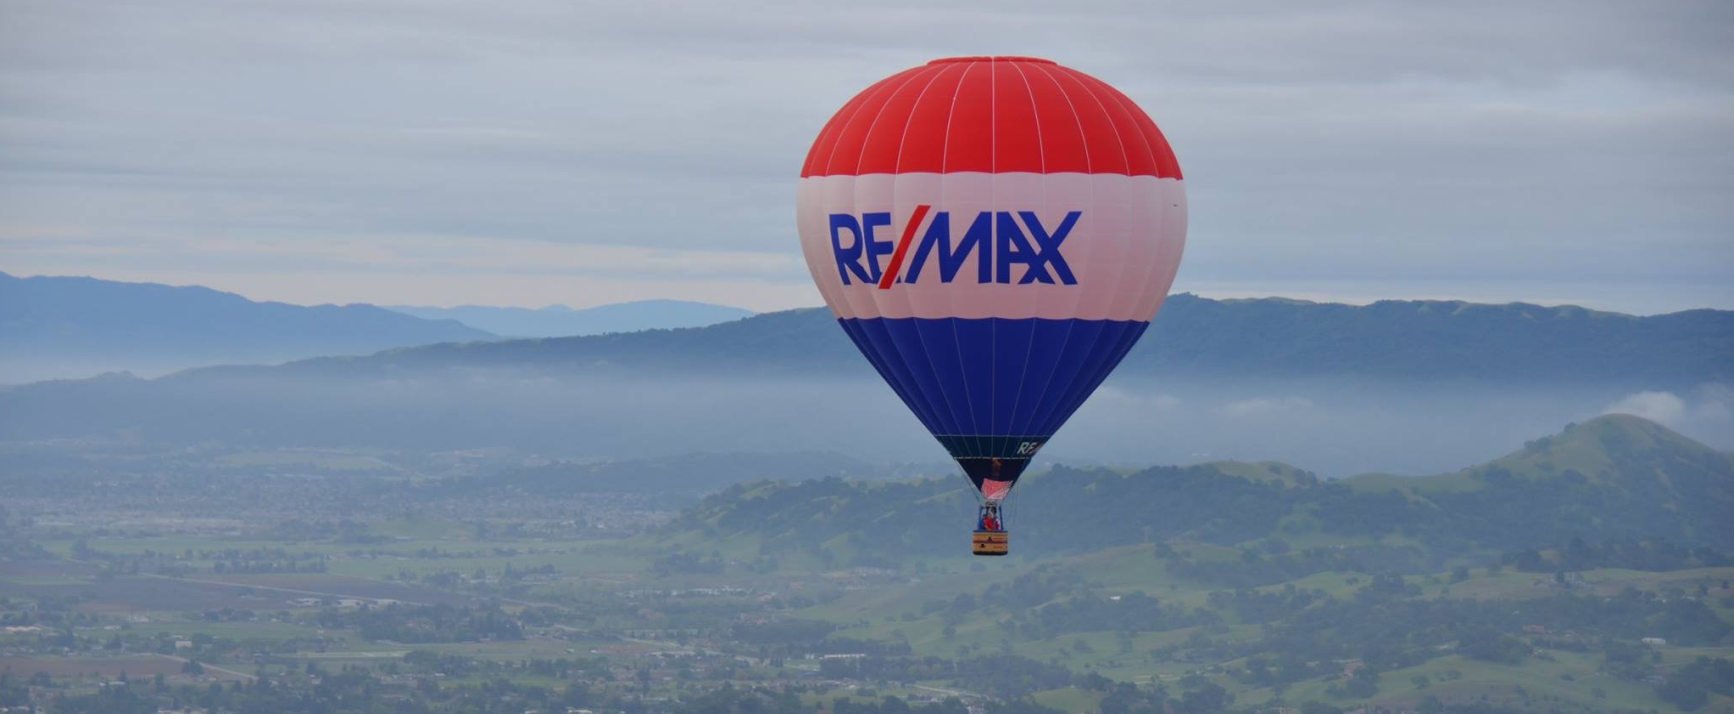 RE/MAX Balloon - Northern California